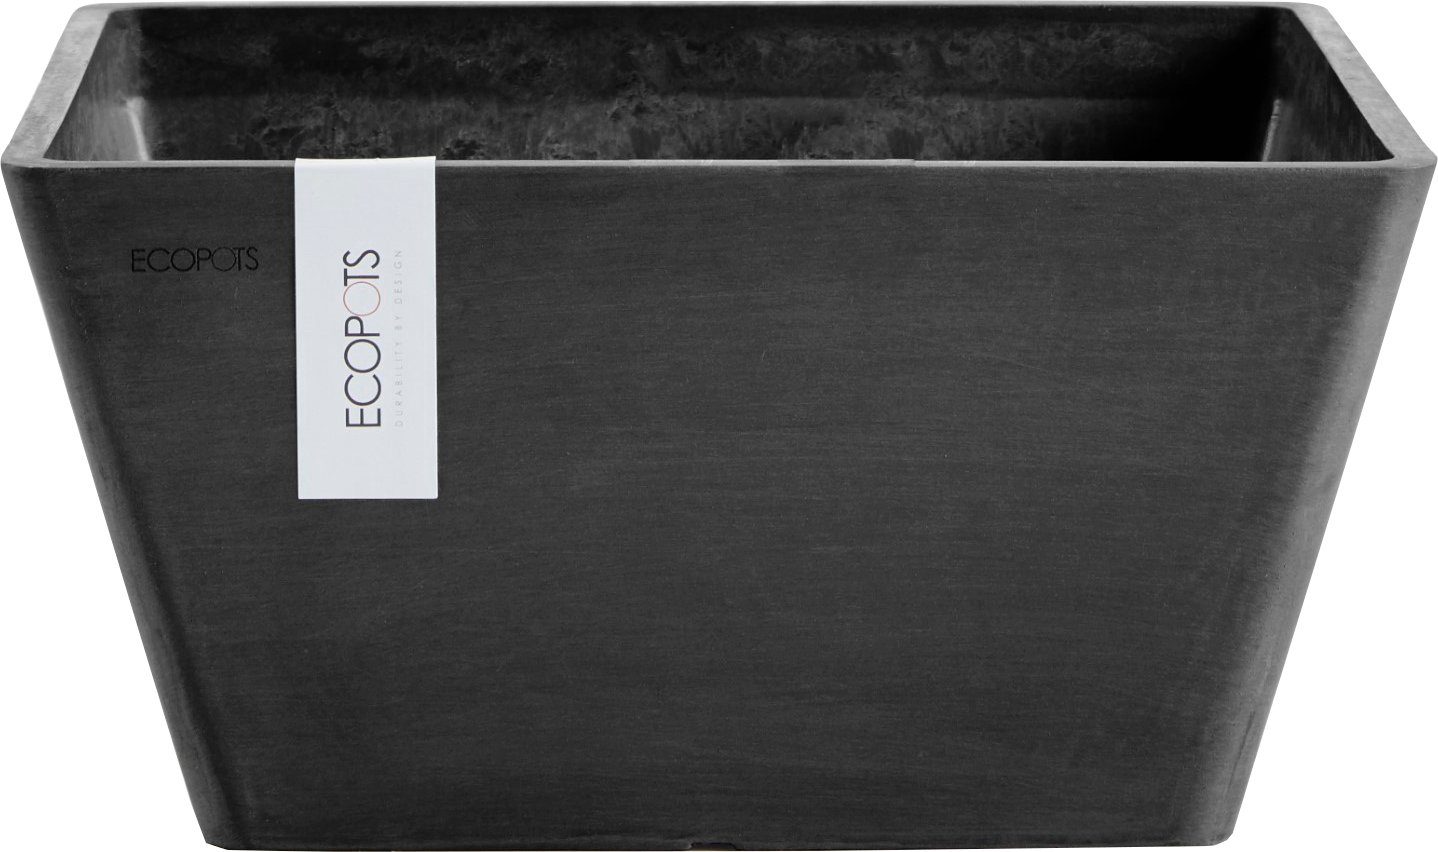 BERLIN Grey, ECOPOTS 31x31x15,5 BxTxH: Dark Blumentopf cm